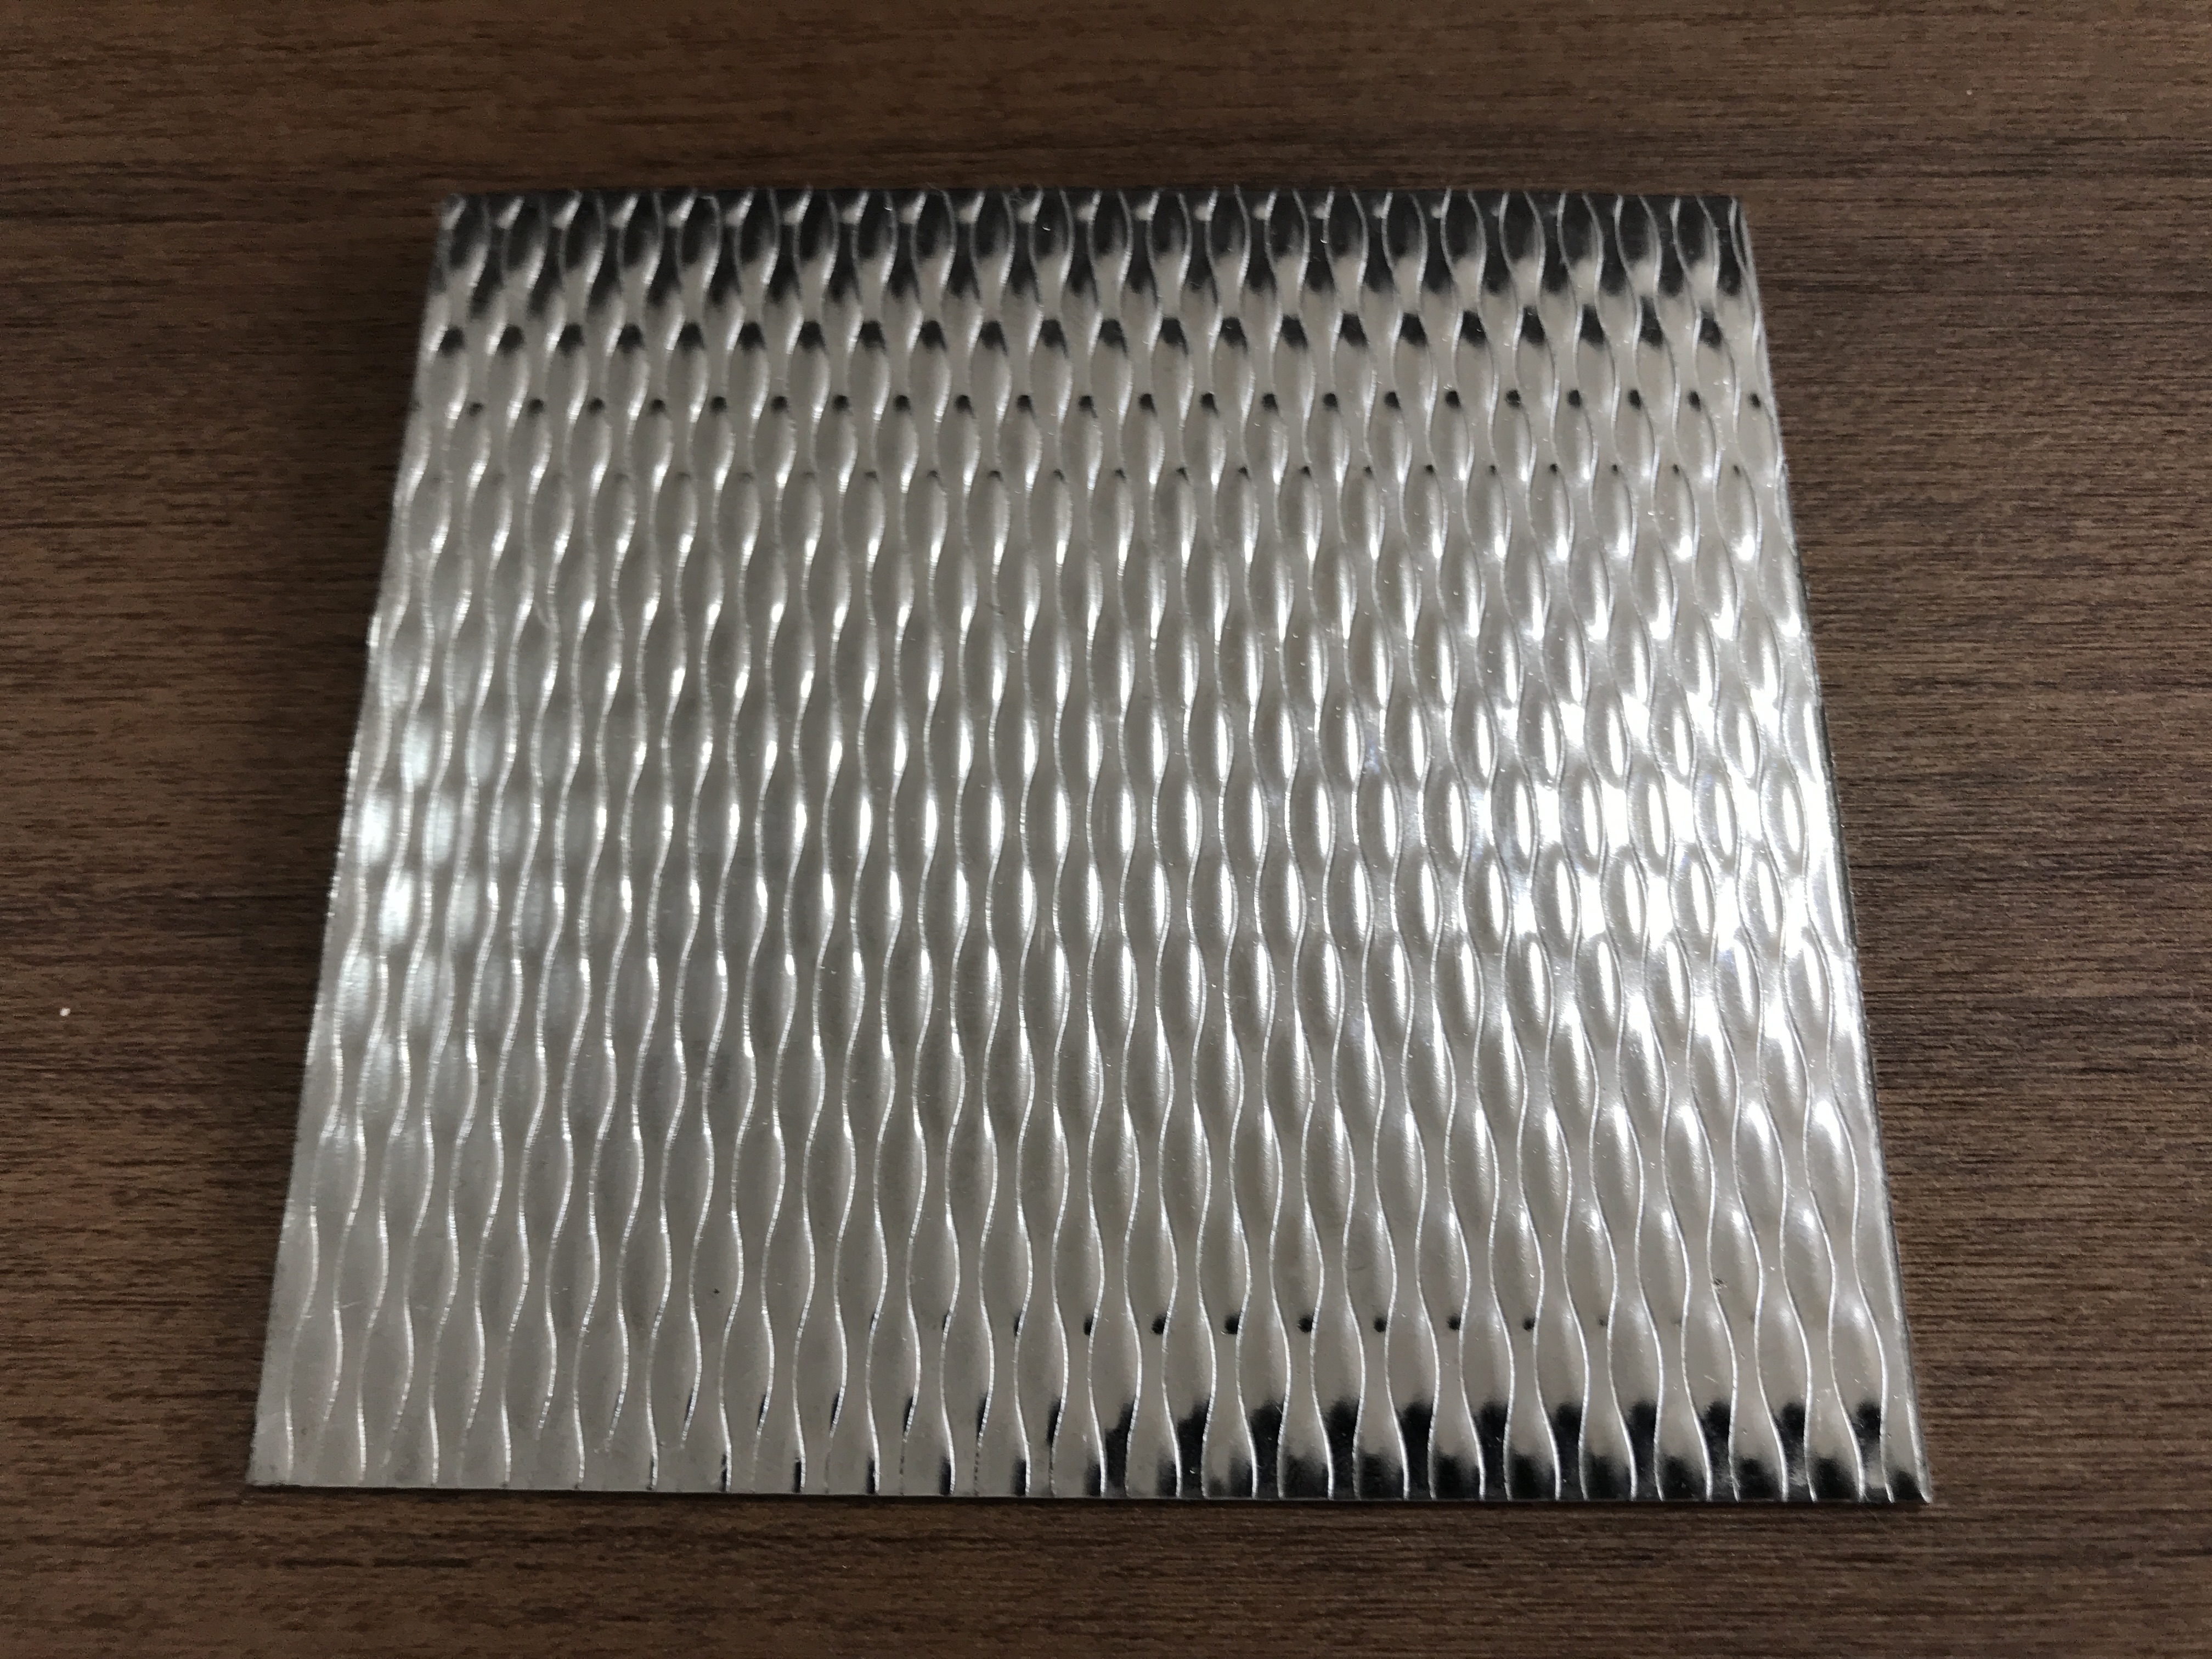 5WL Rigidized Stainless Steel Cladding Panel